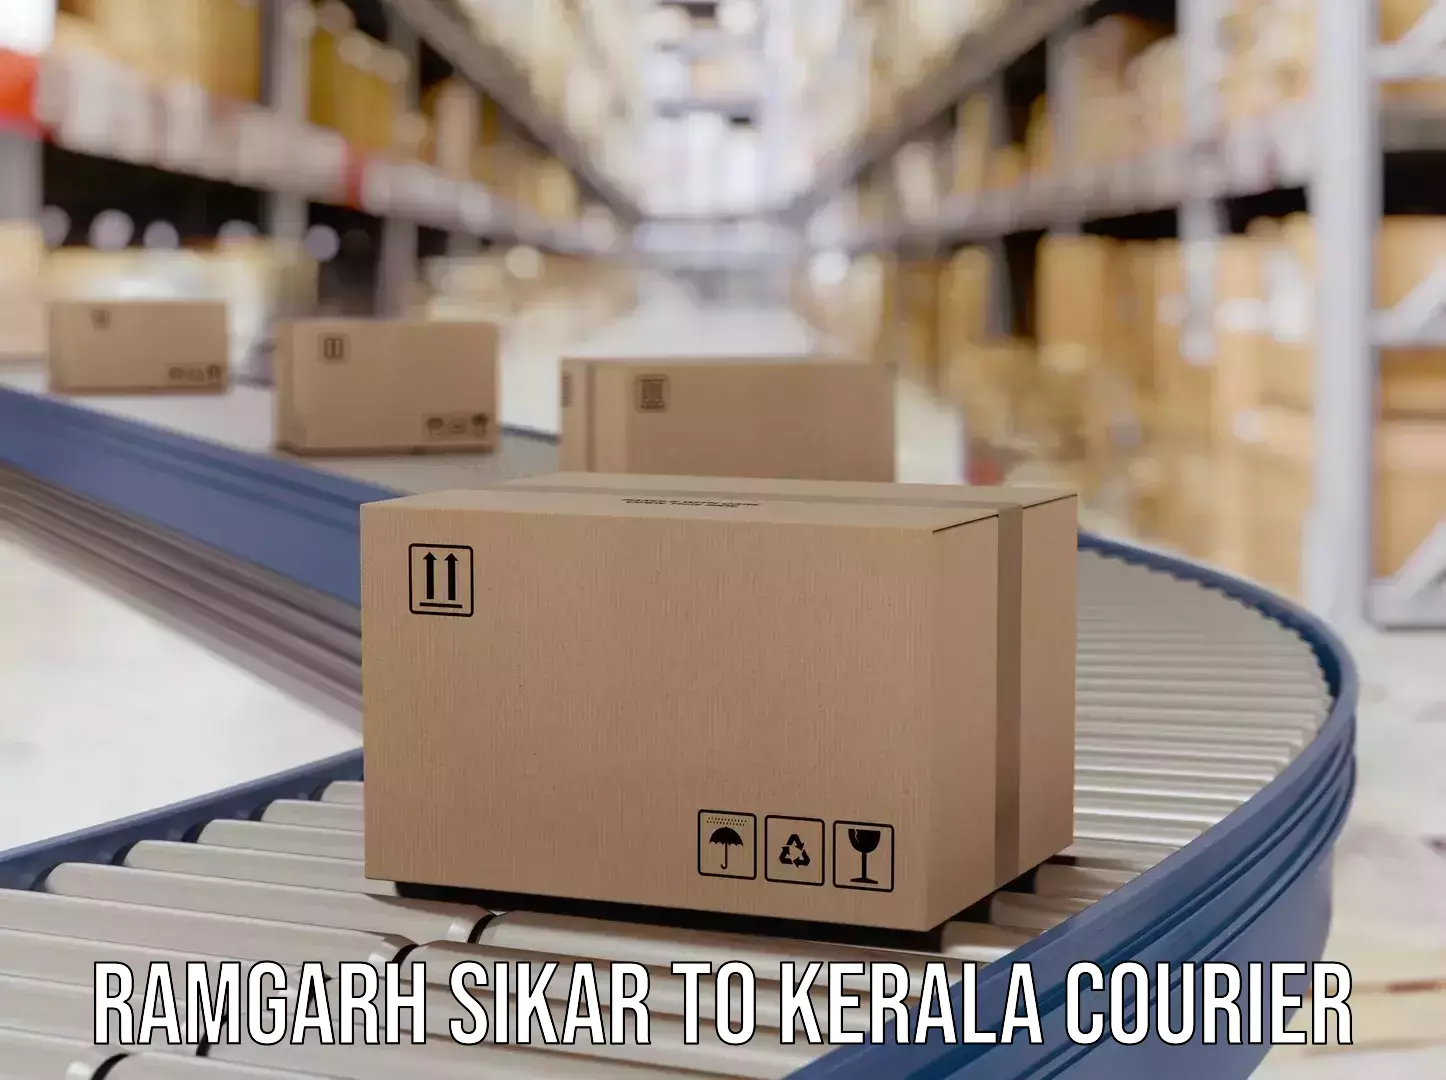 On-demand courier Ramgarh Sikar to Kondotty